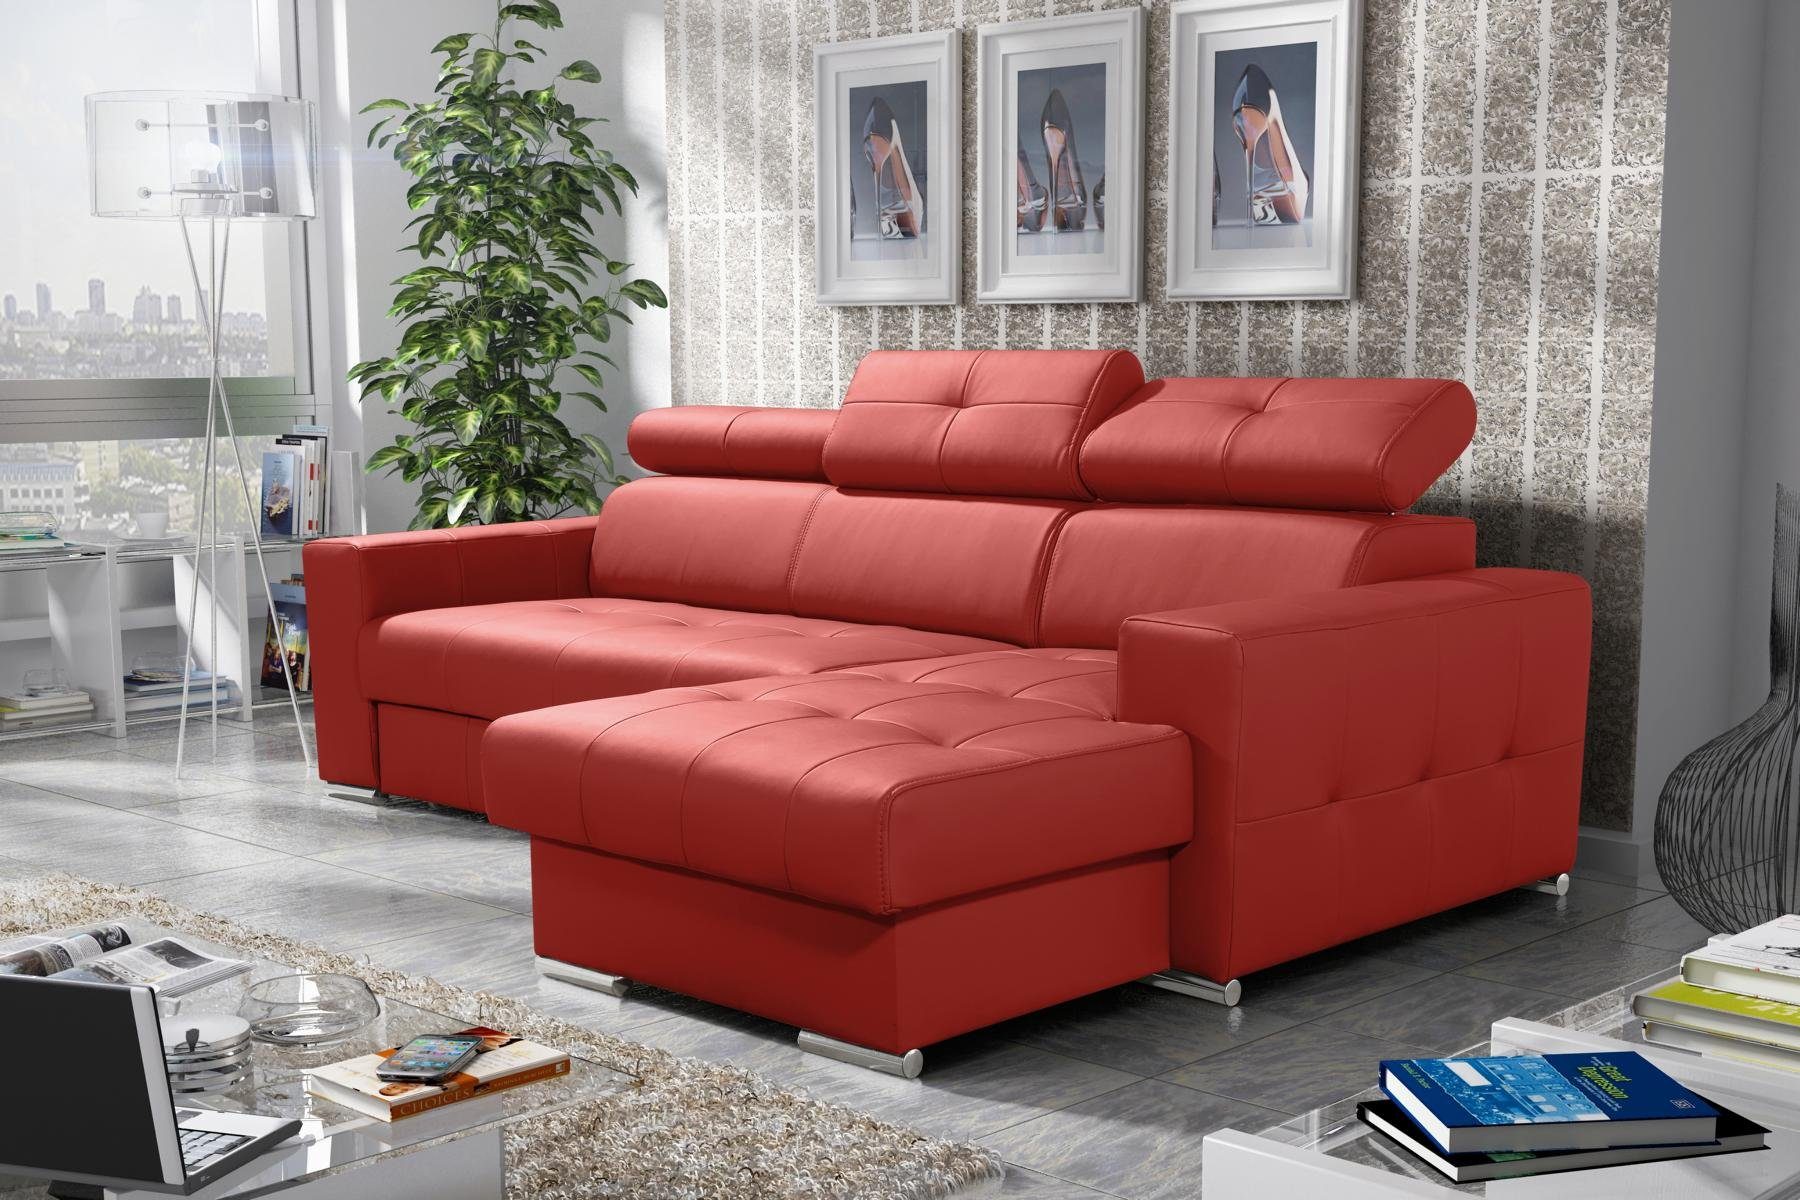 Stoff Wohnzimmer Polsterung Made Sofa JVmoebel Eckcouch Rot in Ecksofa L-Form Leder, Europe Neu